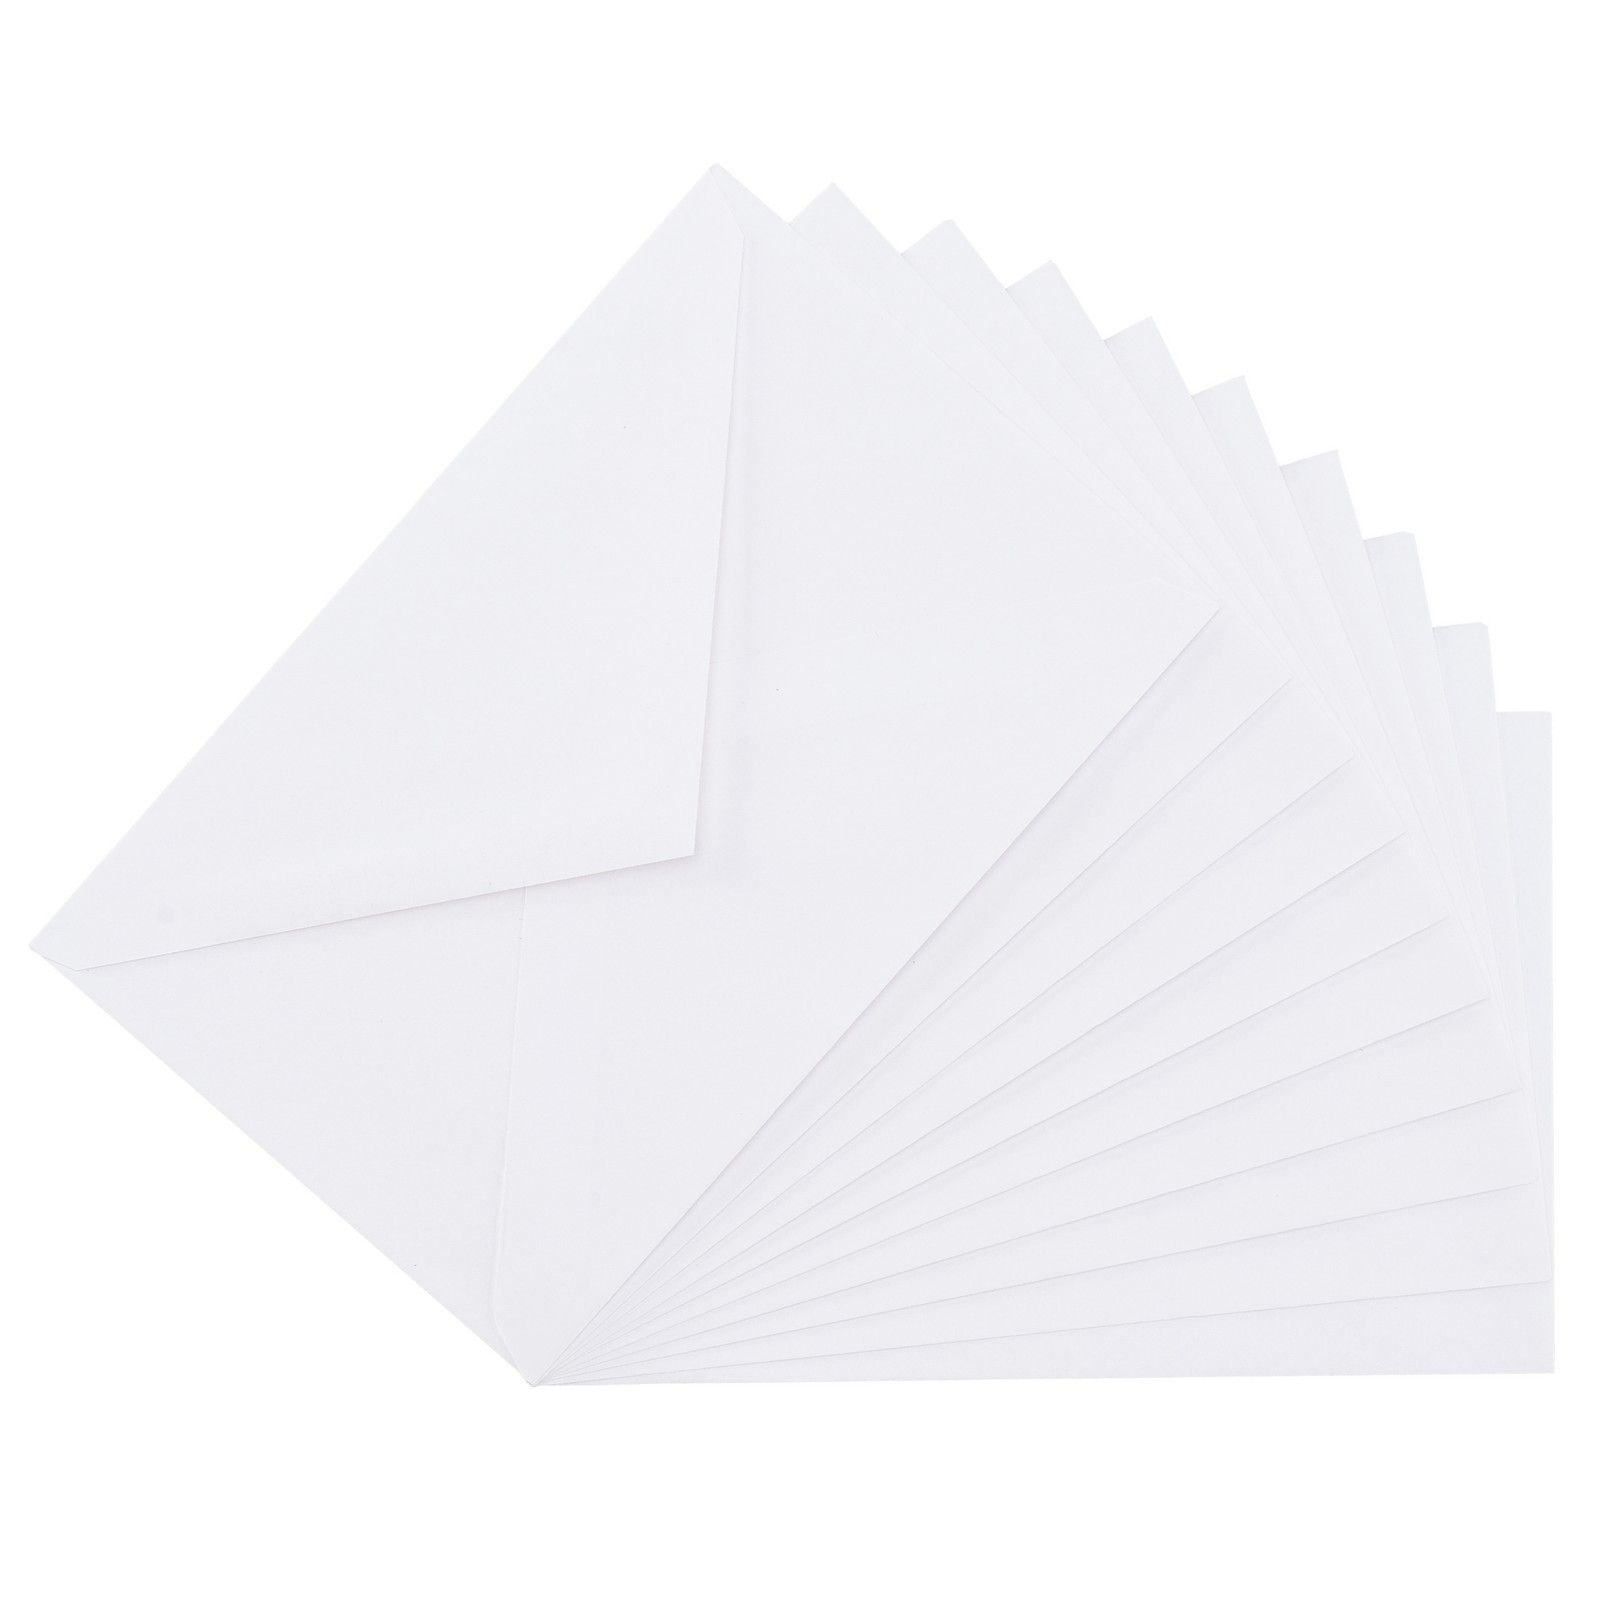 Nellie's Choice • Envelopes 11.4x17.6cm White